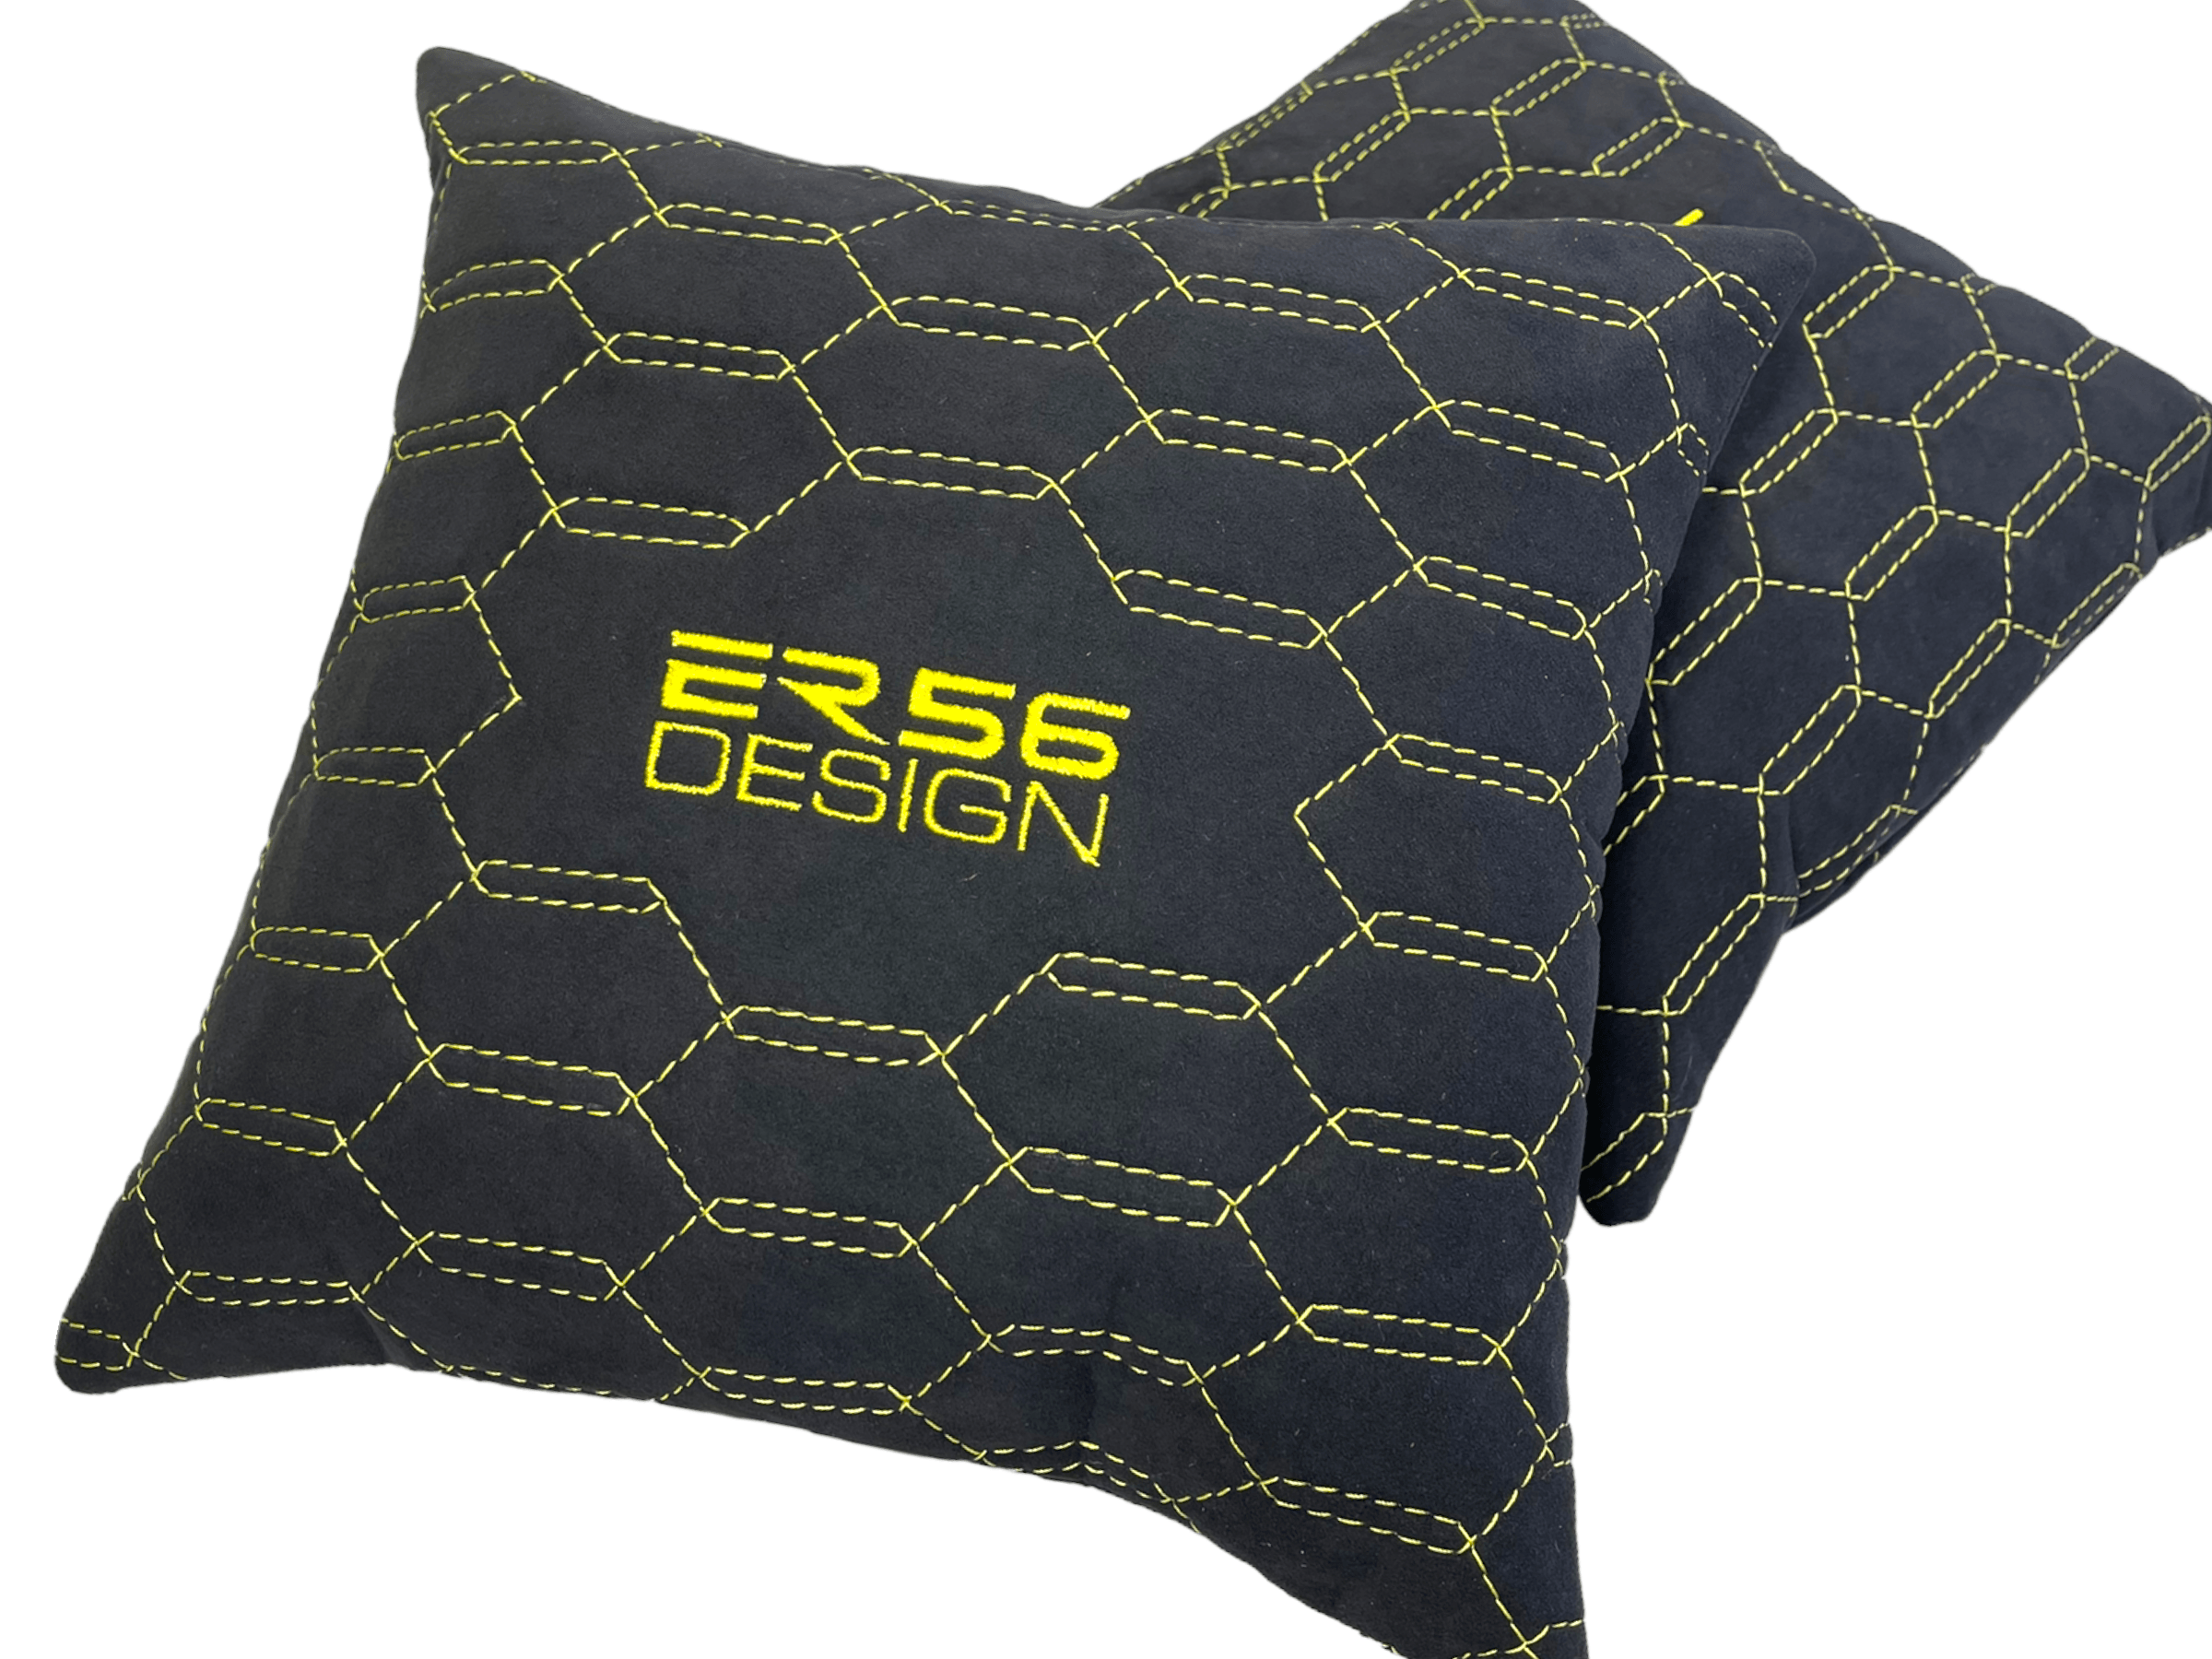 Black Alcantara Leather Pillows ER56 Design Set of 2 Yellow Sewing - AutoWin